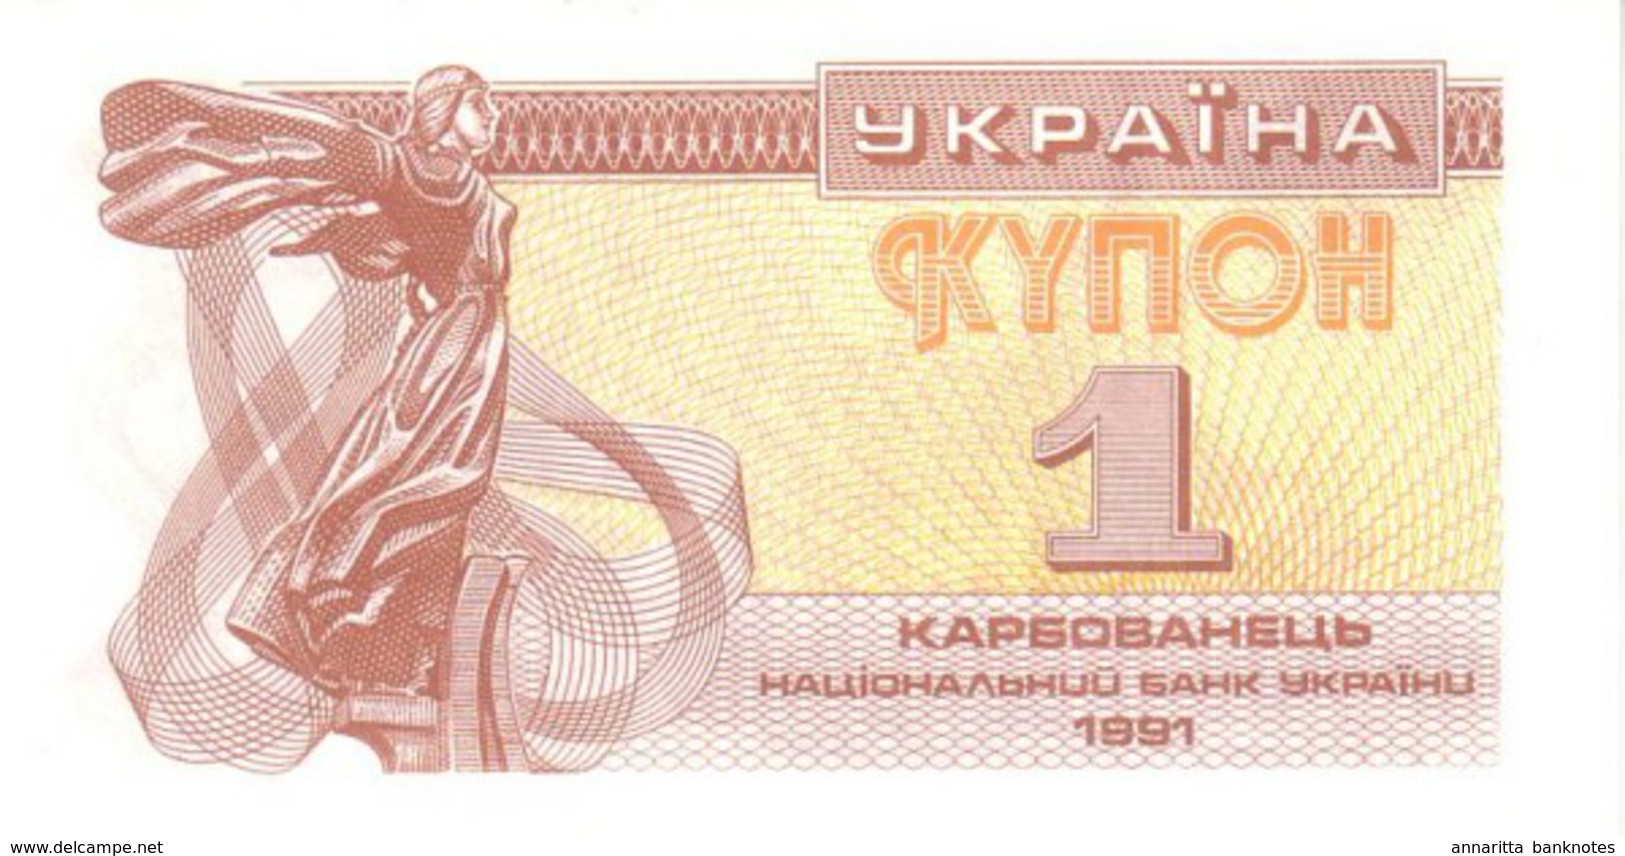 Ukraine (NBU) 1 карбованець (Karbovanets) 1991 (1992)  UNC Cat No. P-81a / UA801a - Ukraine